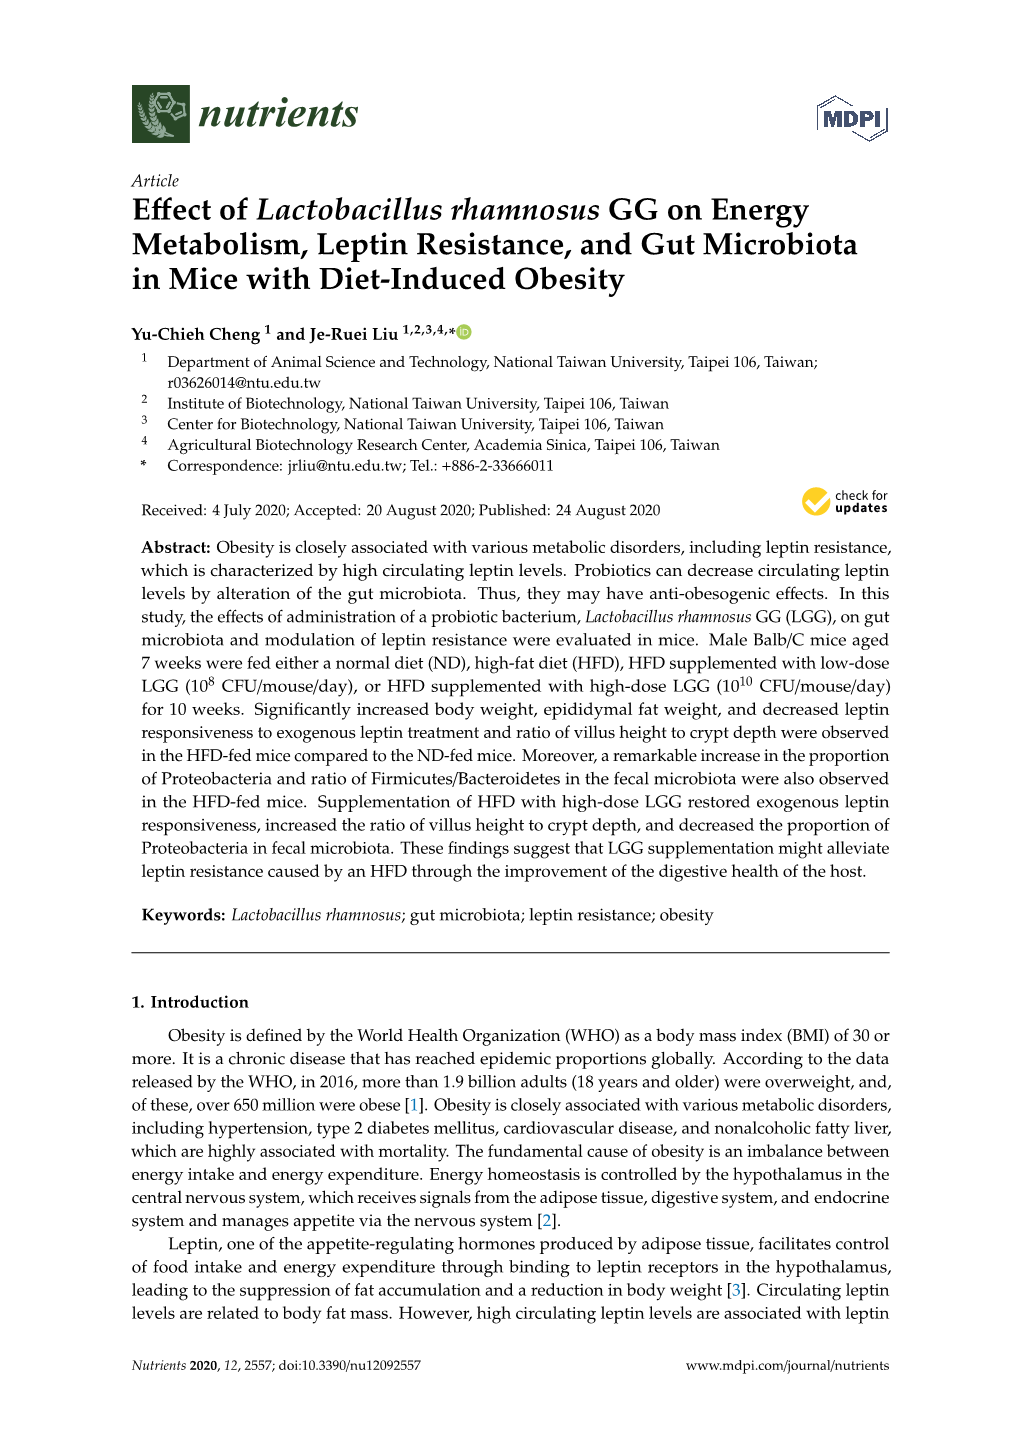 Effect of Lactobacillus Rhamnosus GG on Energy Metabolism, Leptin